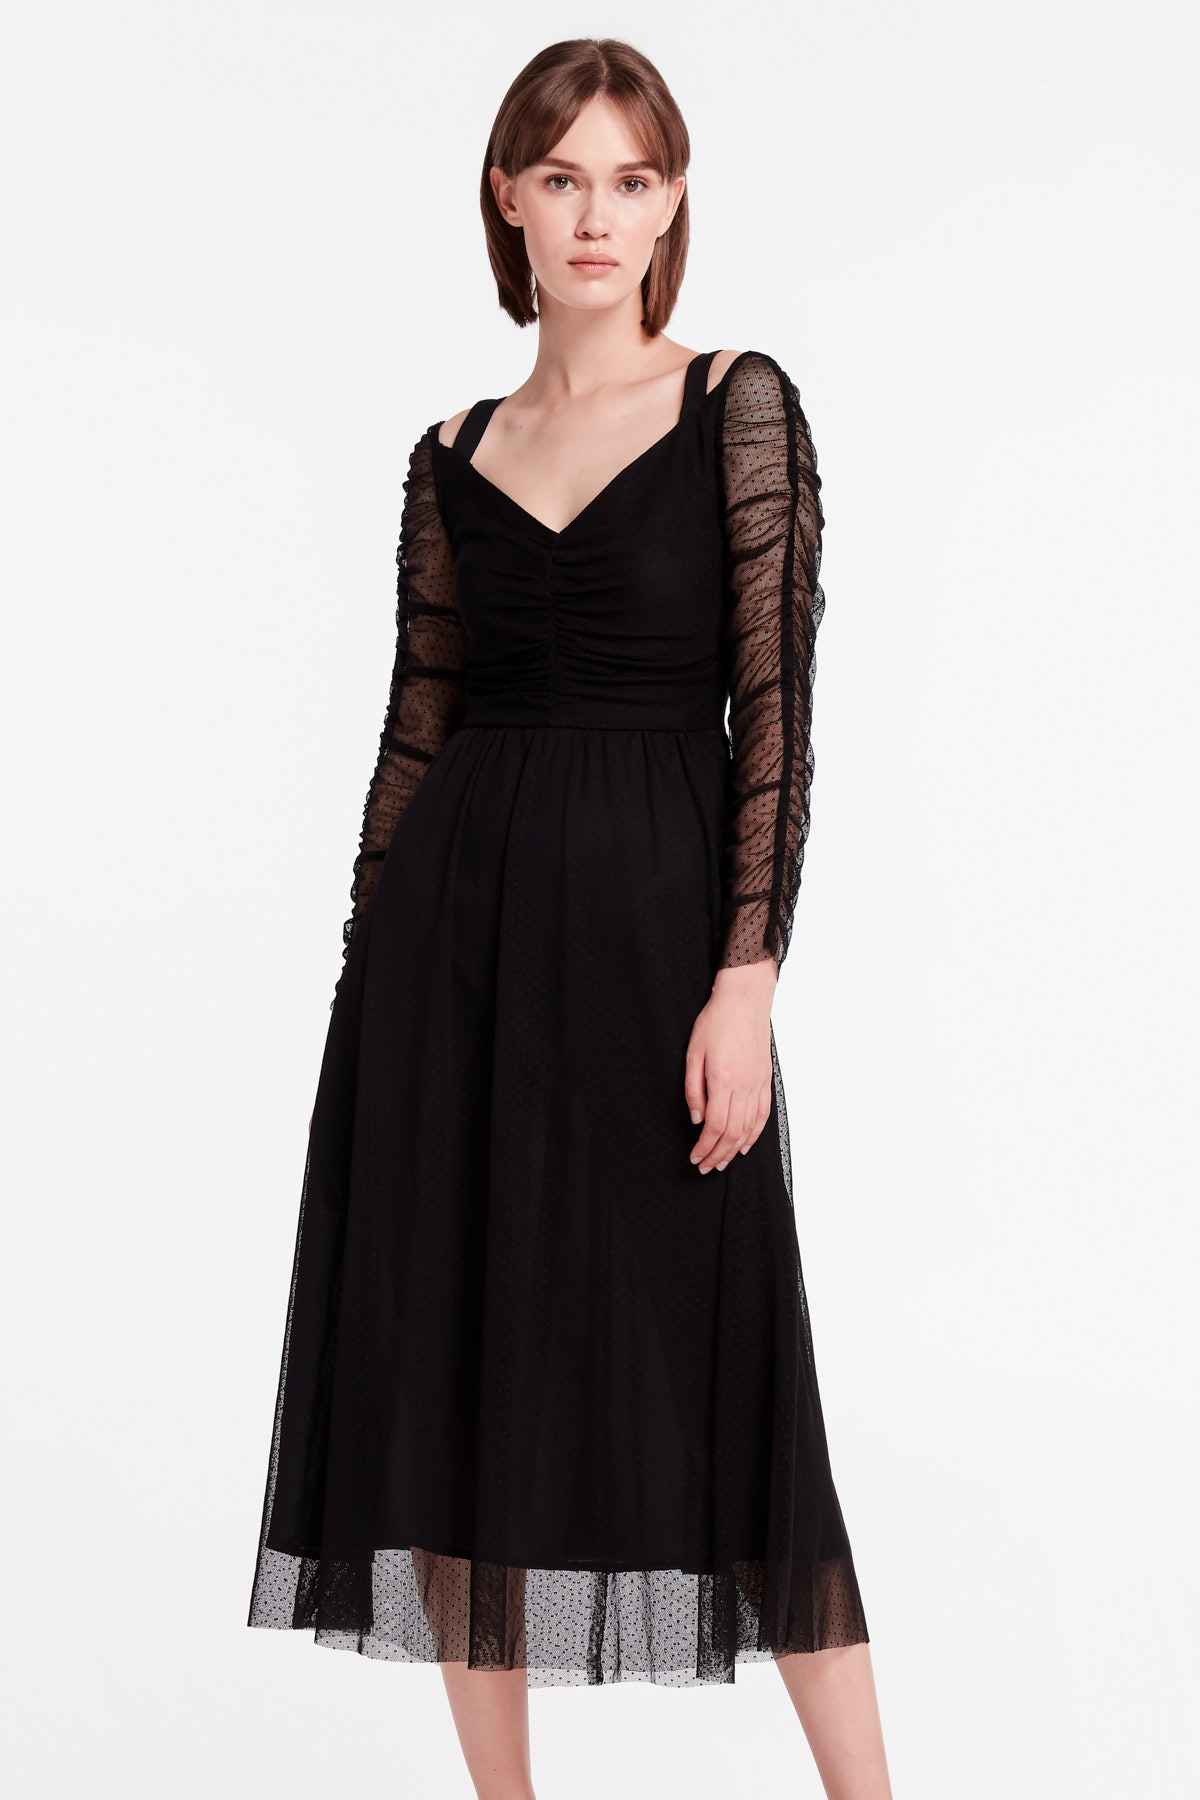 Black midi dress with breast bands, photo 1